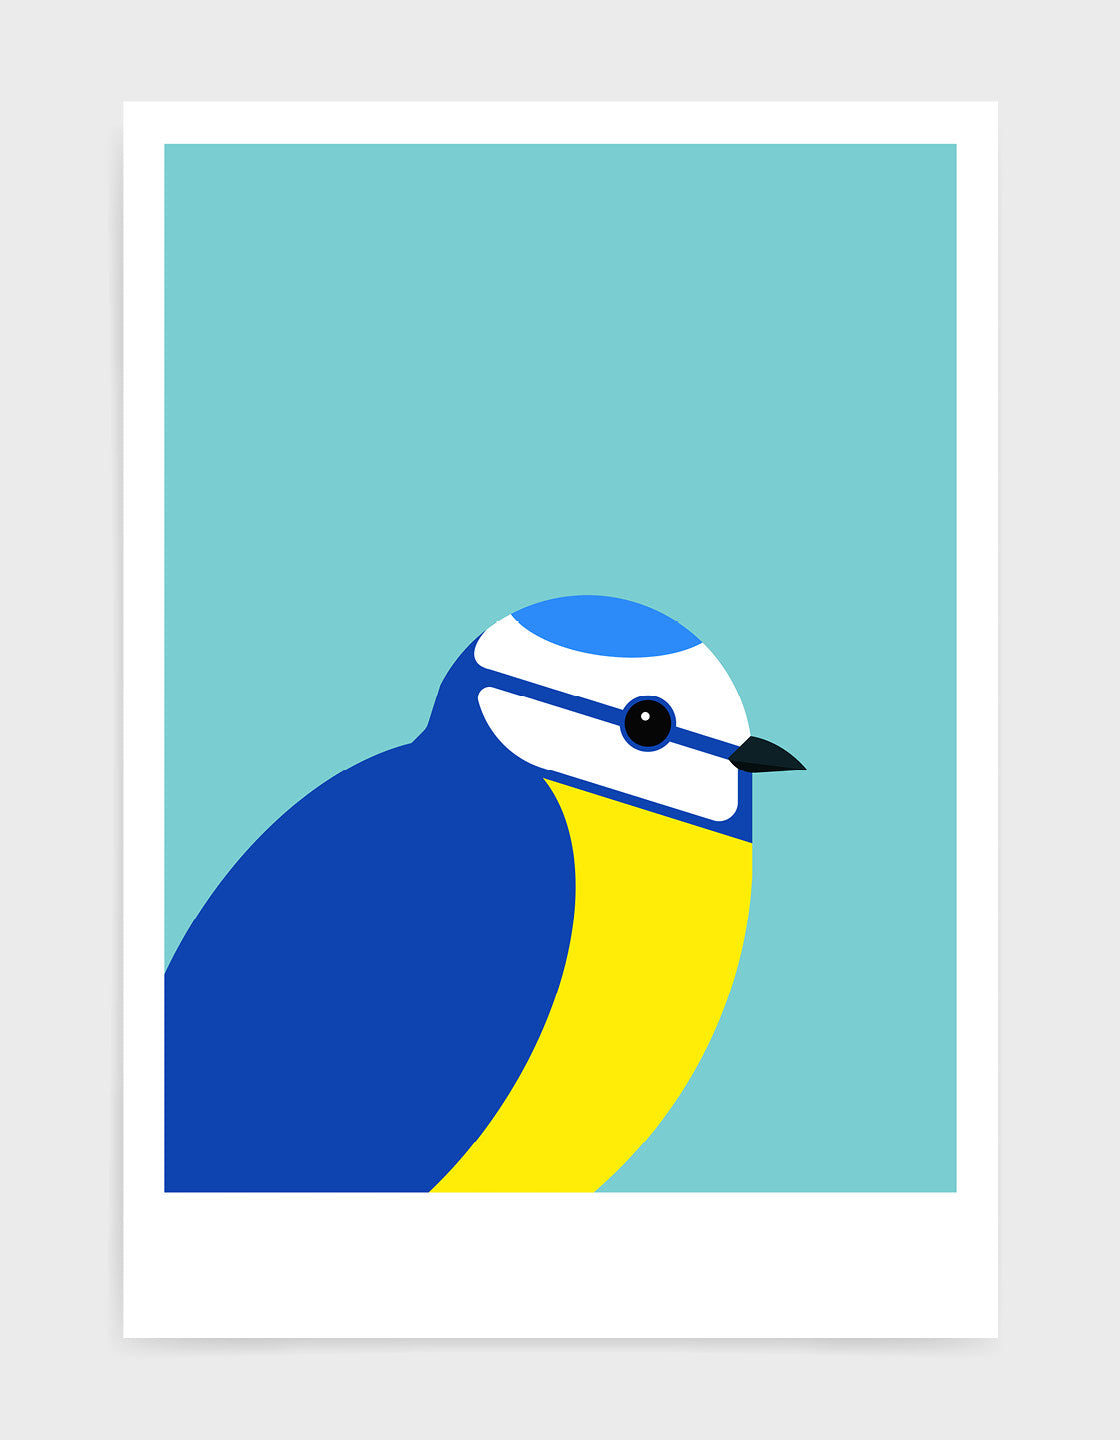 modern illustration of a blue tit bird against a aqua blue background